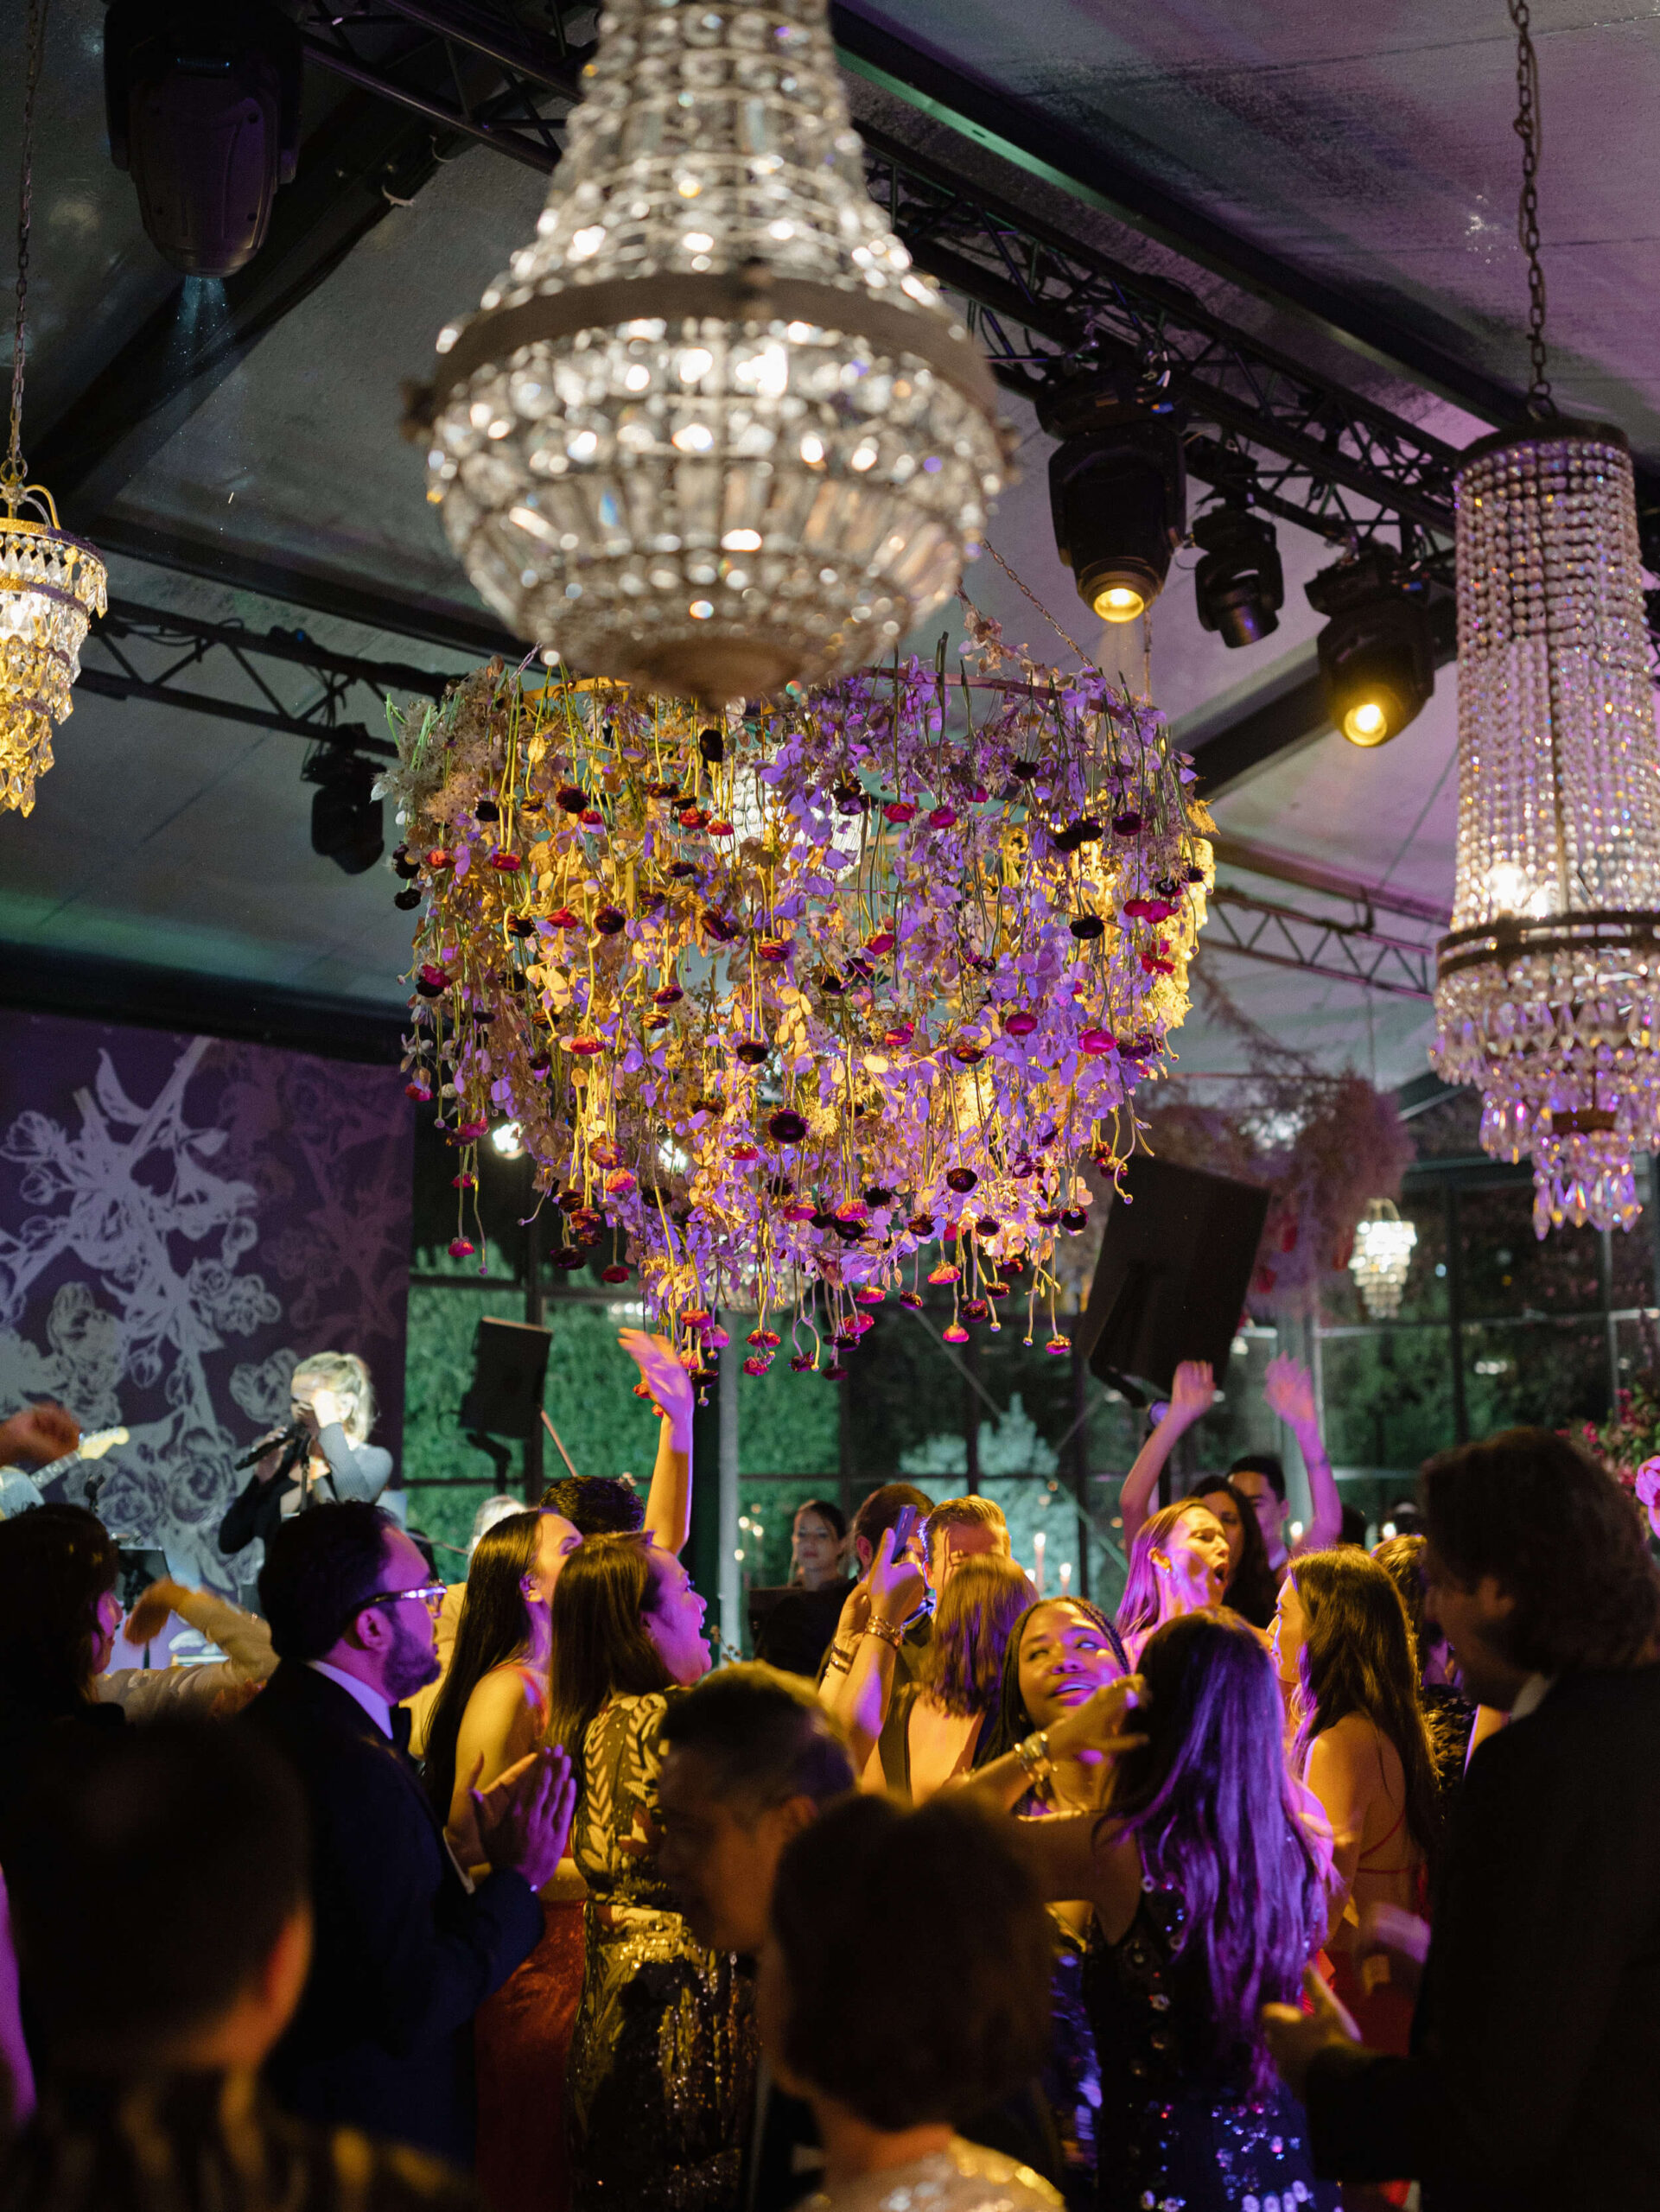 grand chandelier illuminates the party